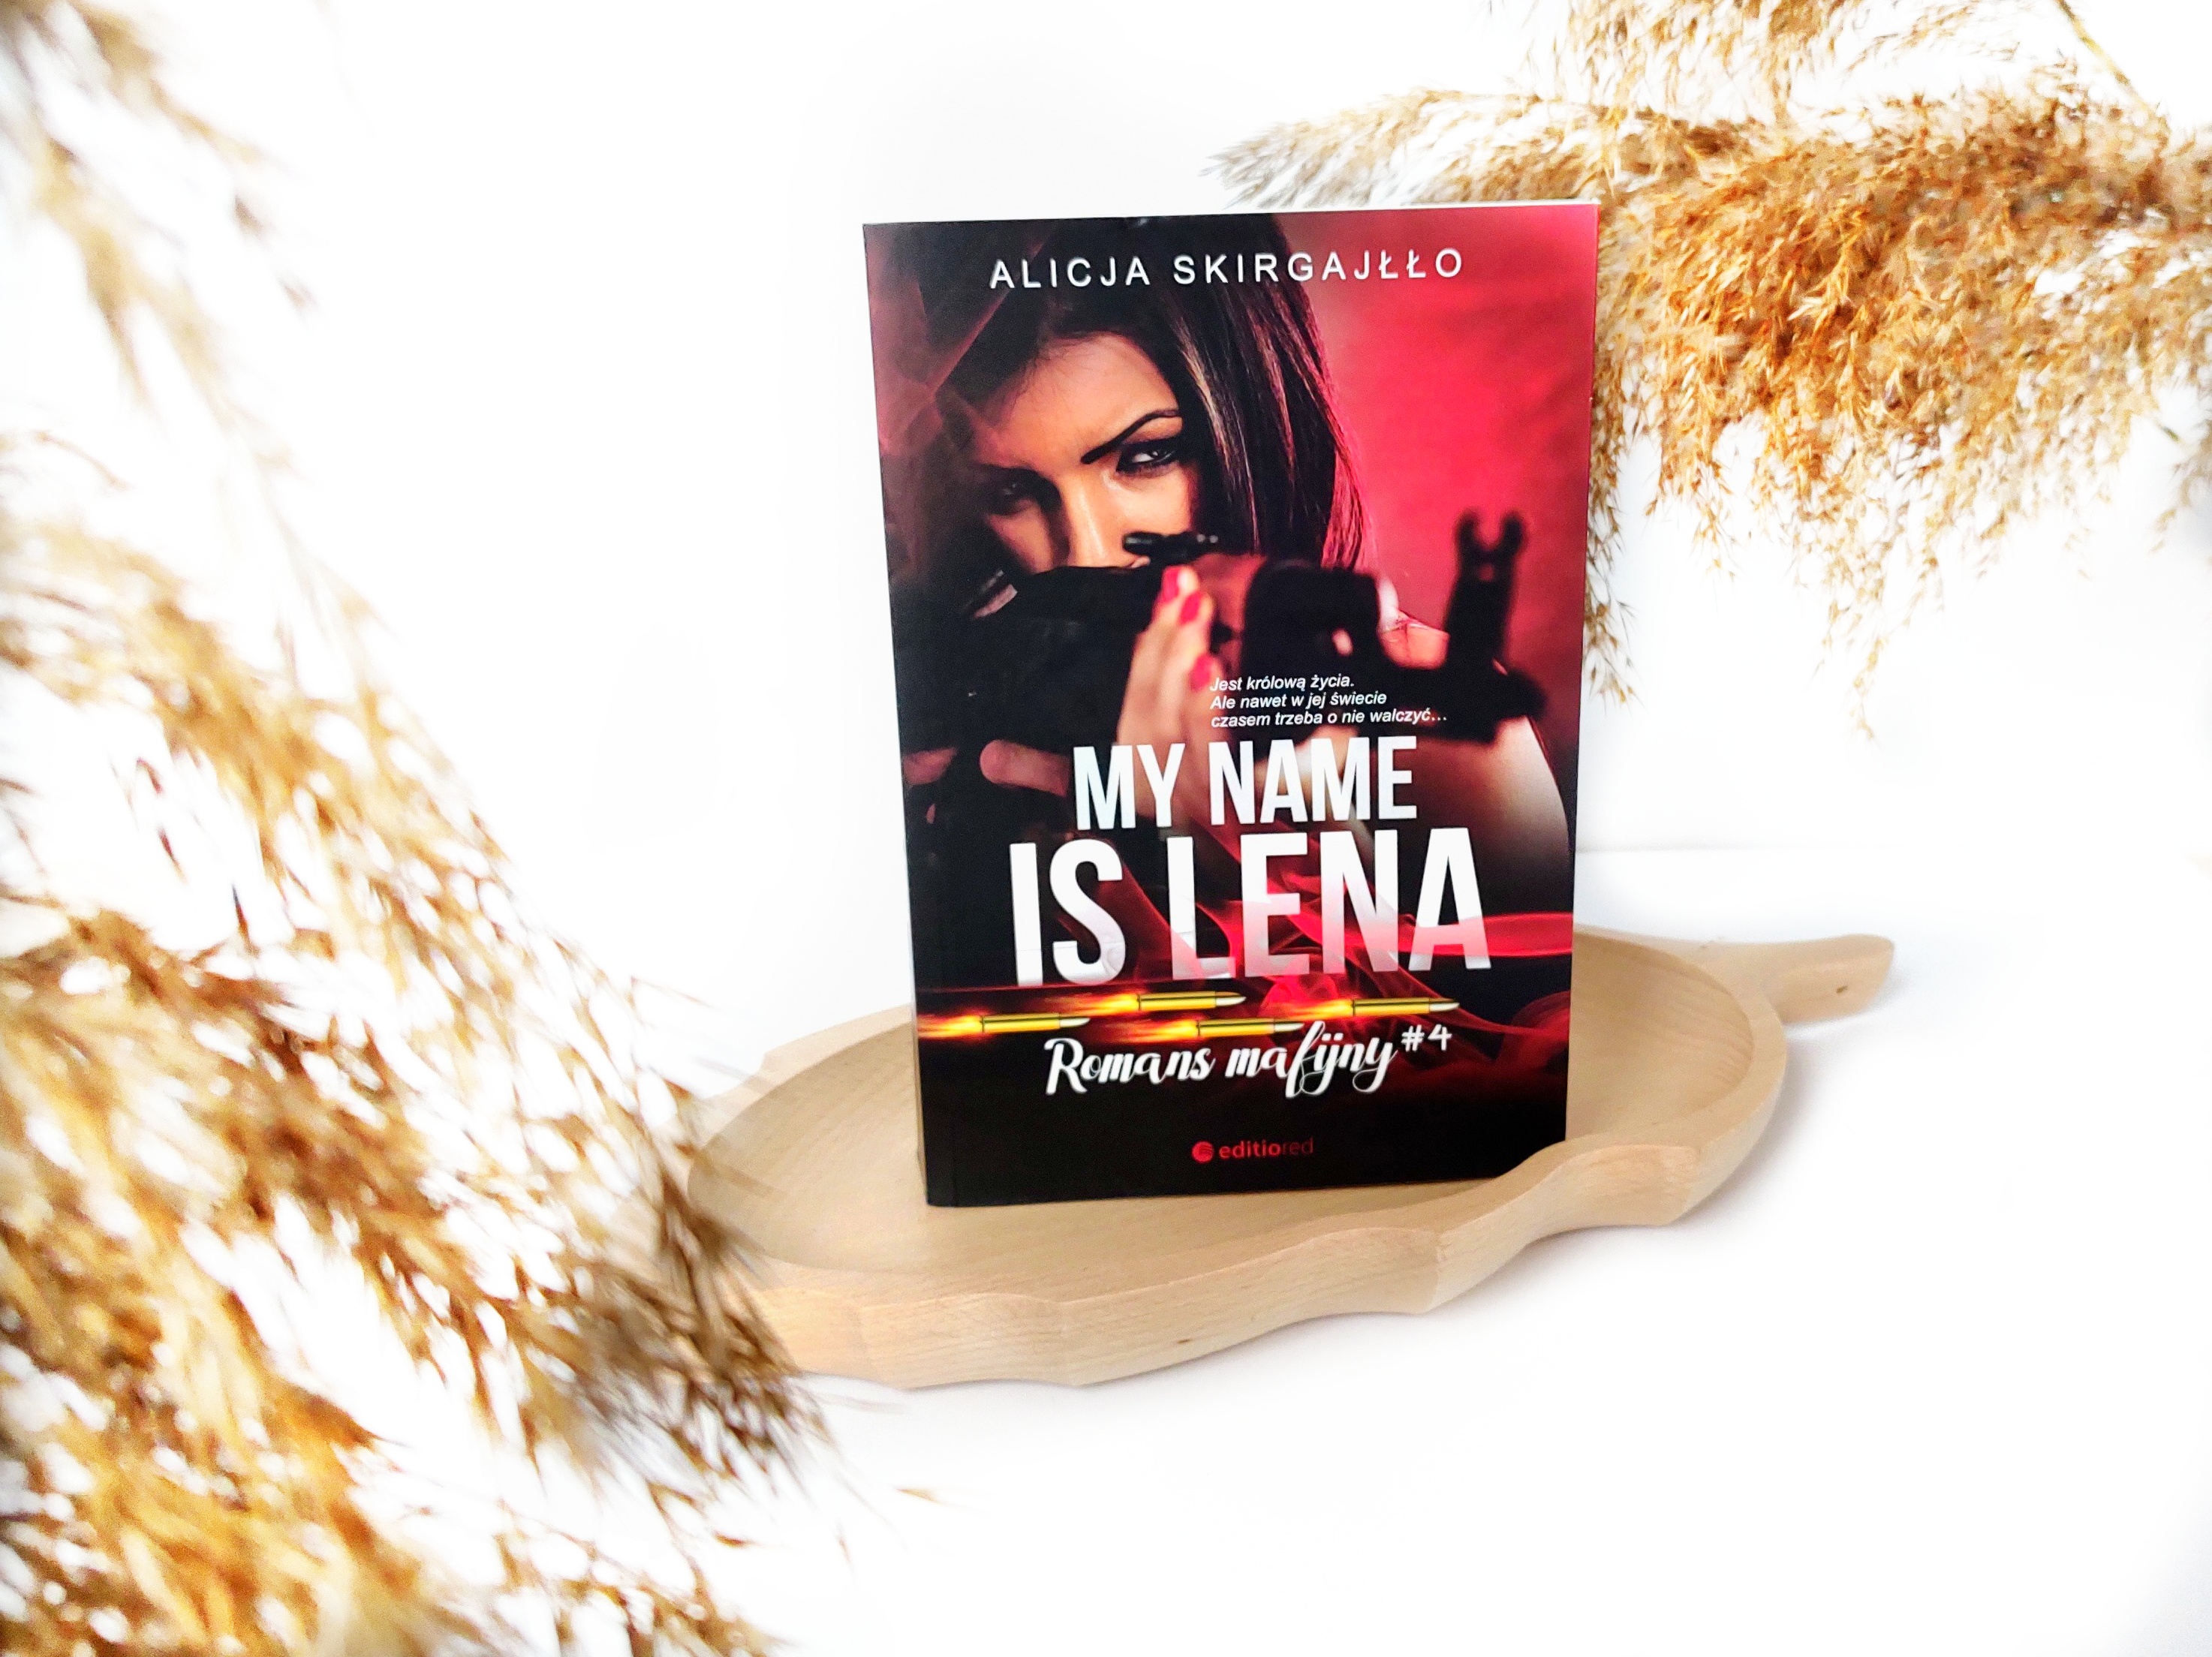 „My name is Lena”, Alicja Skirgajłło